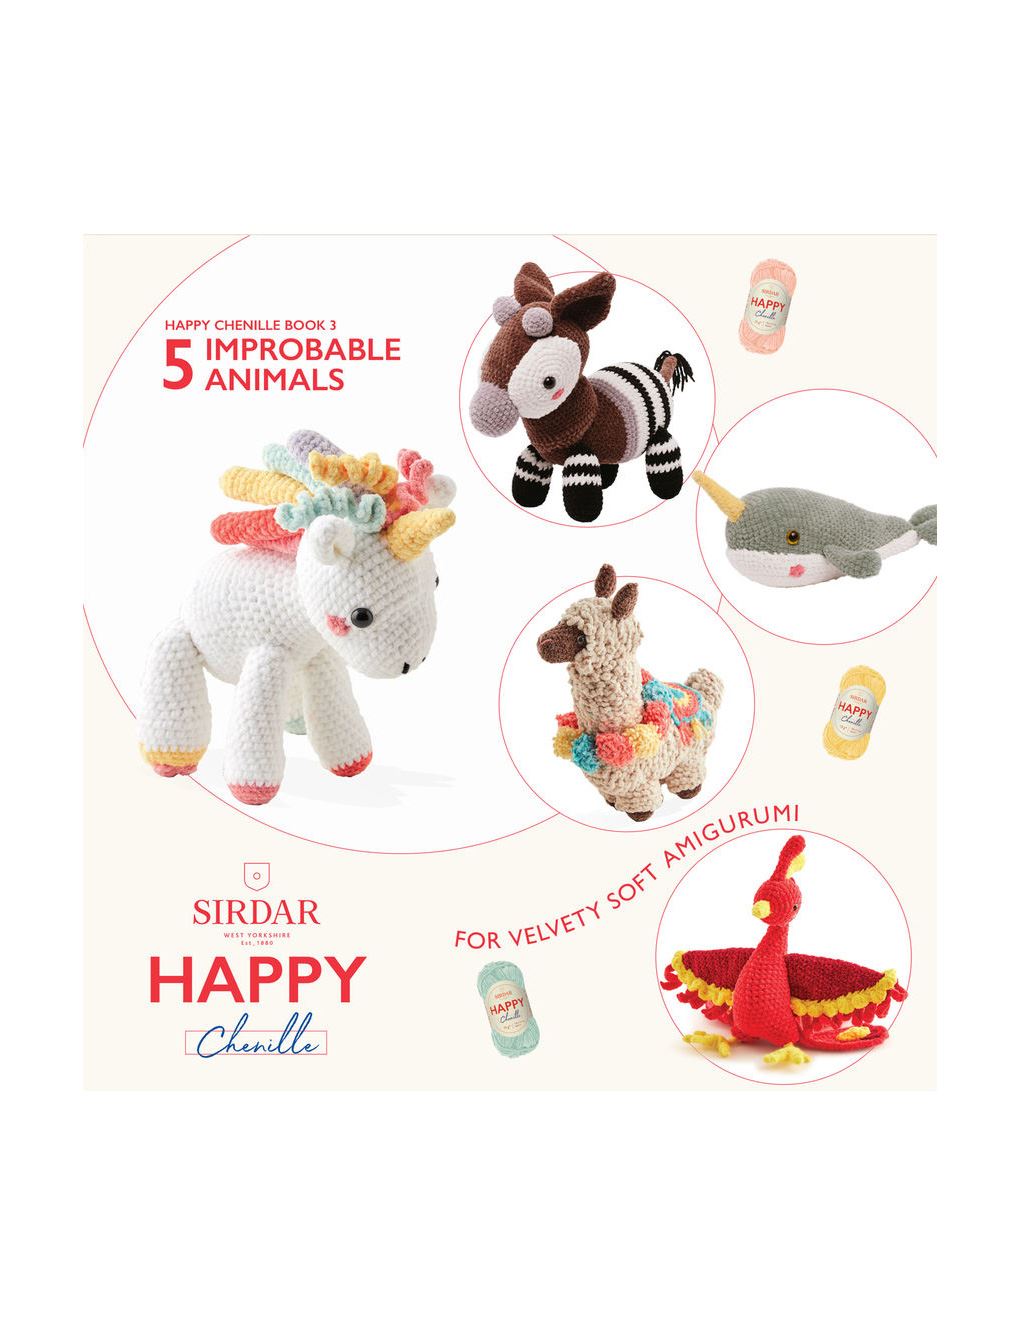 Sirdar Happy Chenille - 5 Improbable Animals - Amigurumi Pattern Book